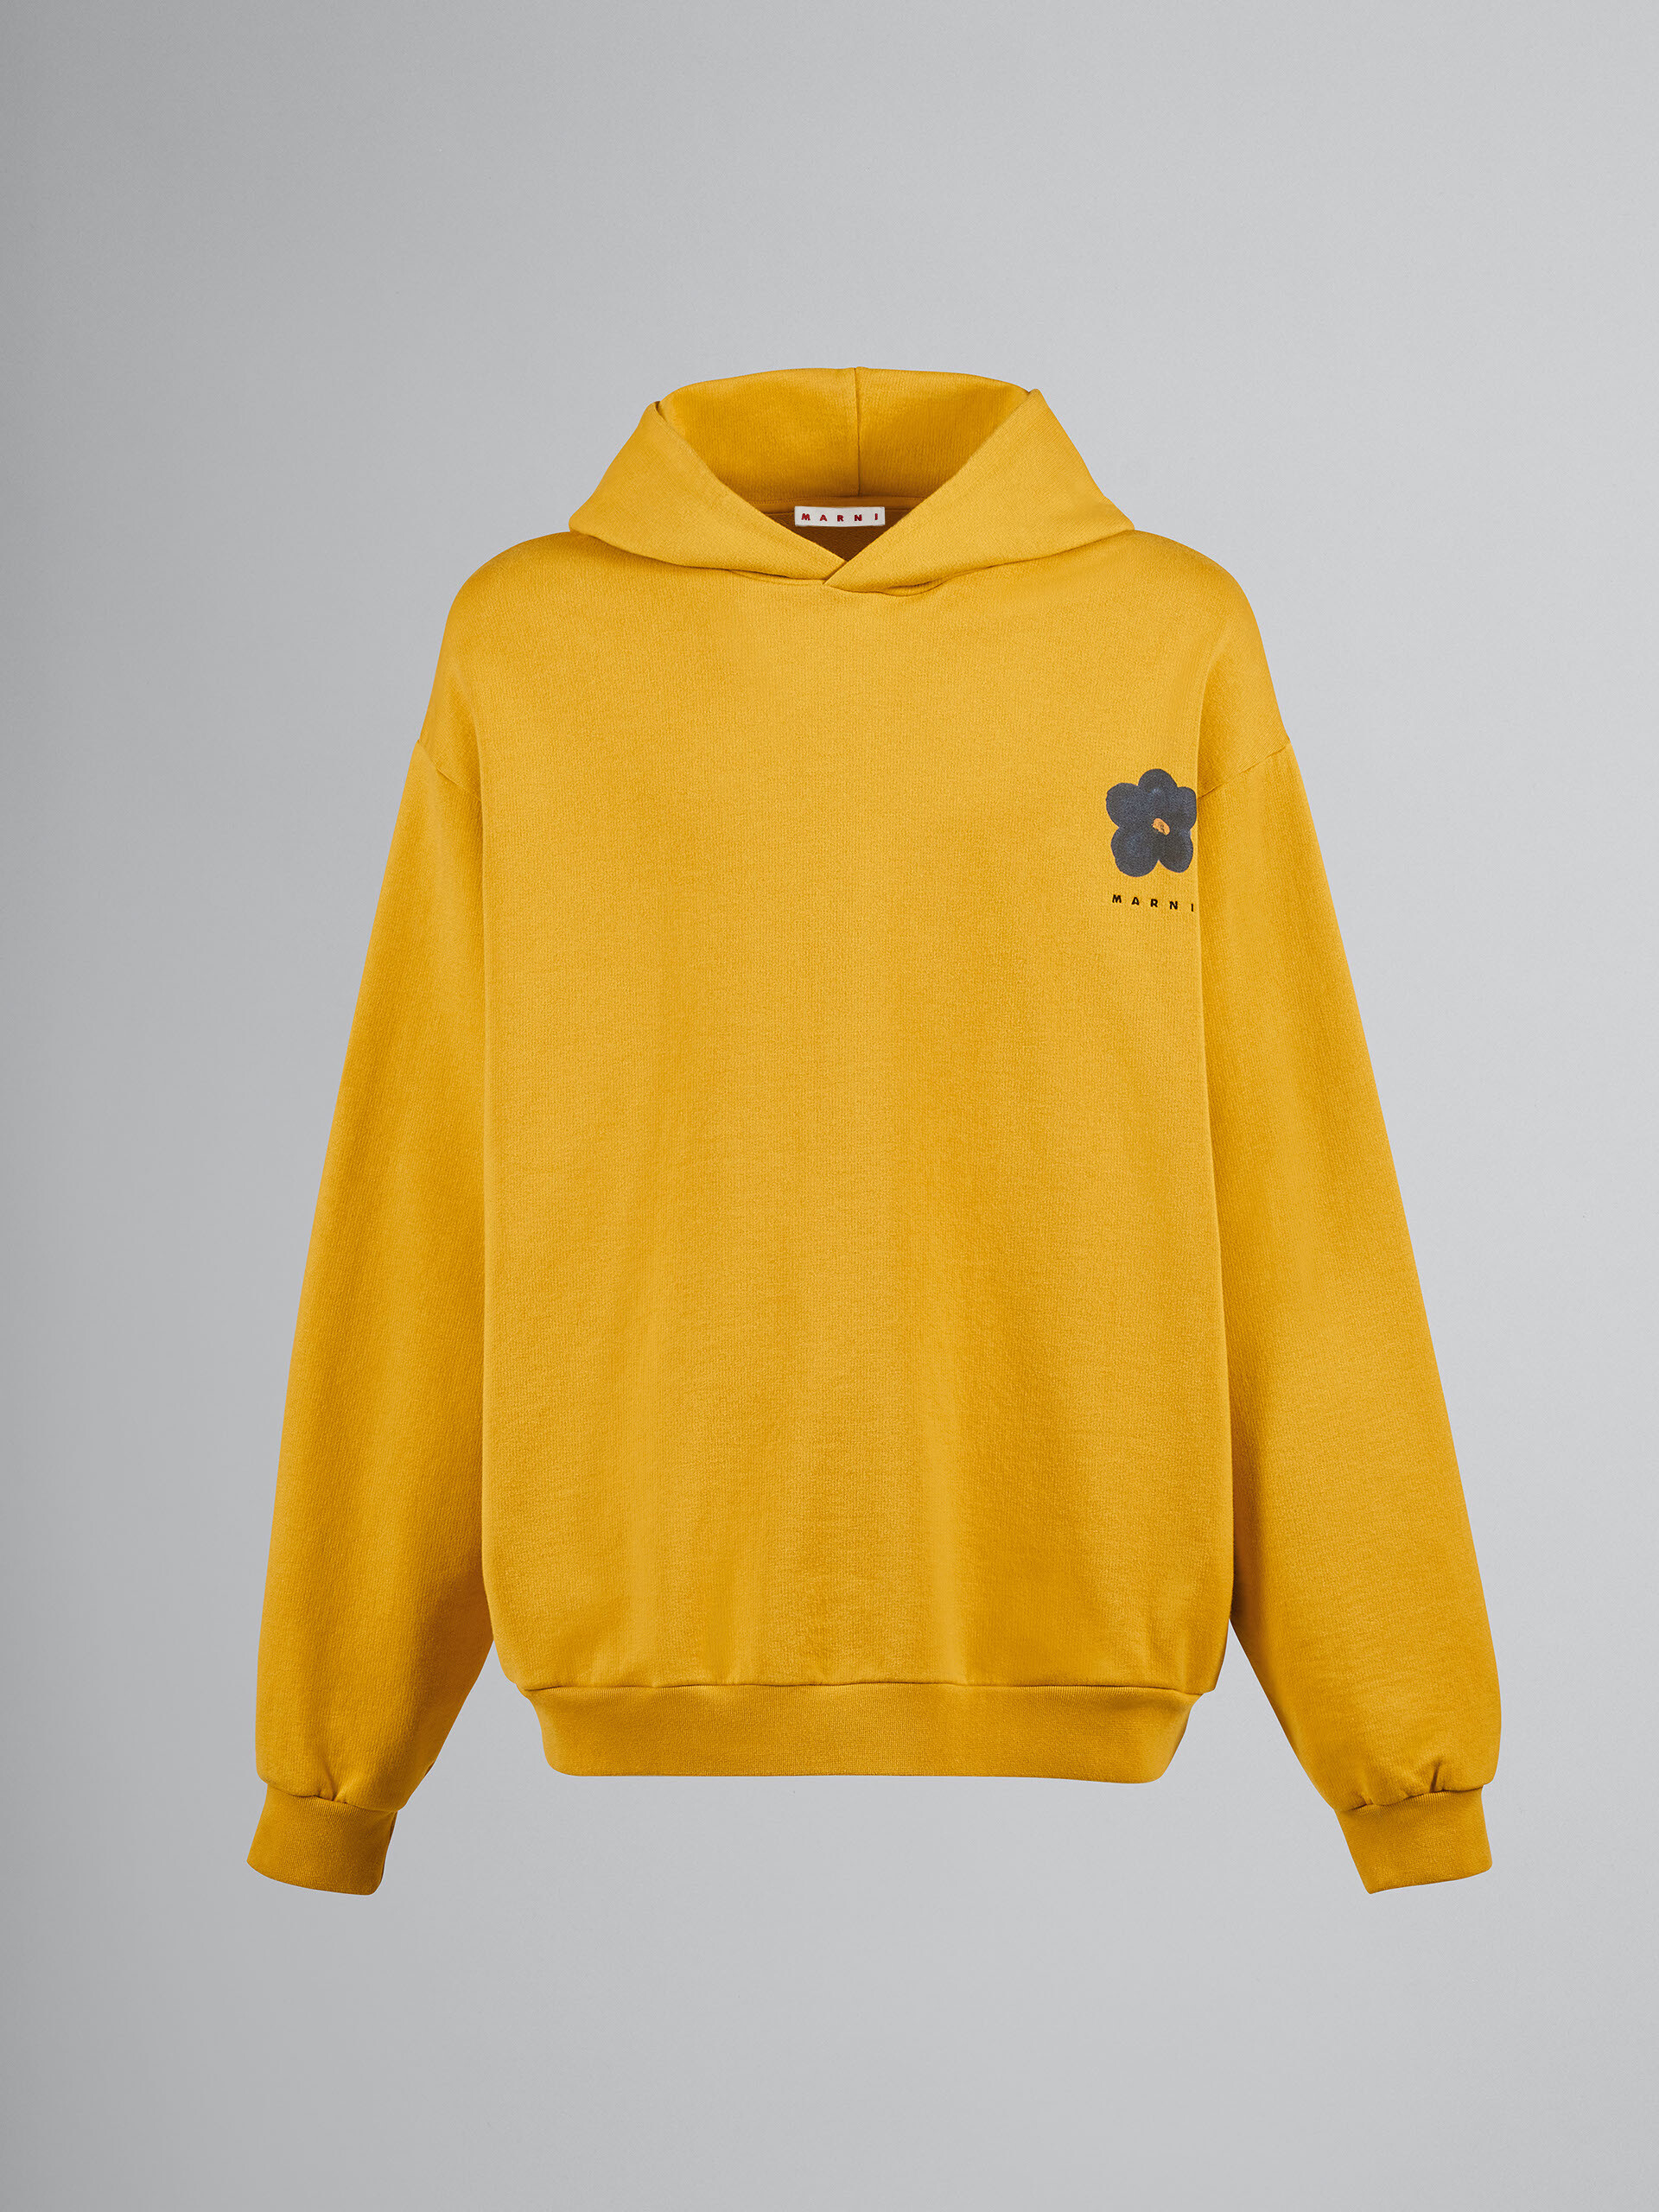 Black Daisy print yellow cotton hooded sweatshirt - Sweaters - Image 1